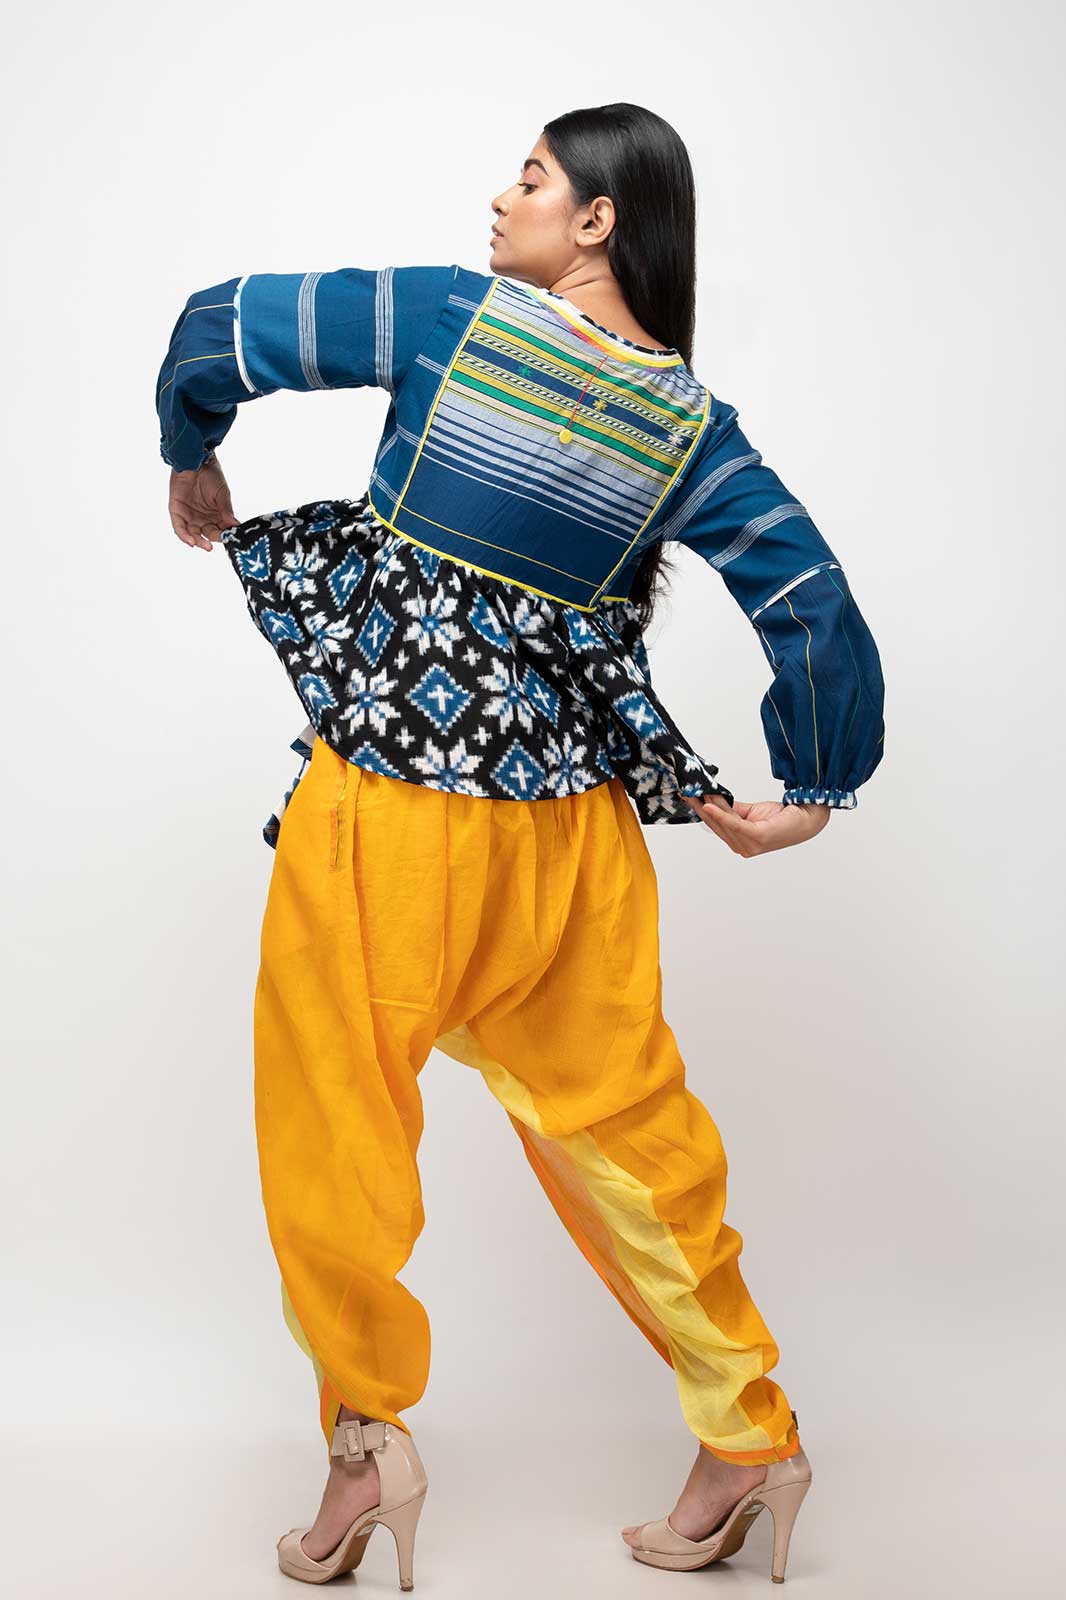 Mens Dhoti Pants  Elegant Ethnic Wear  Fusion Wear  AdiValka